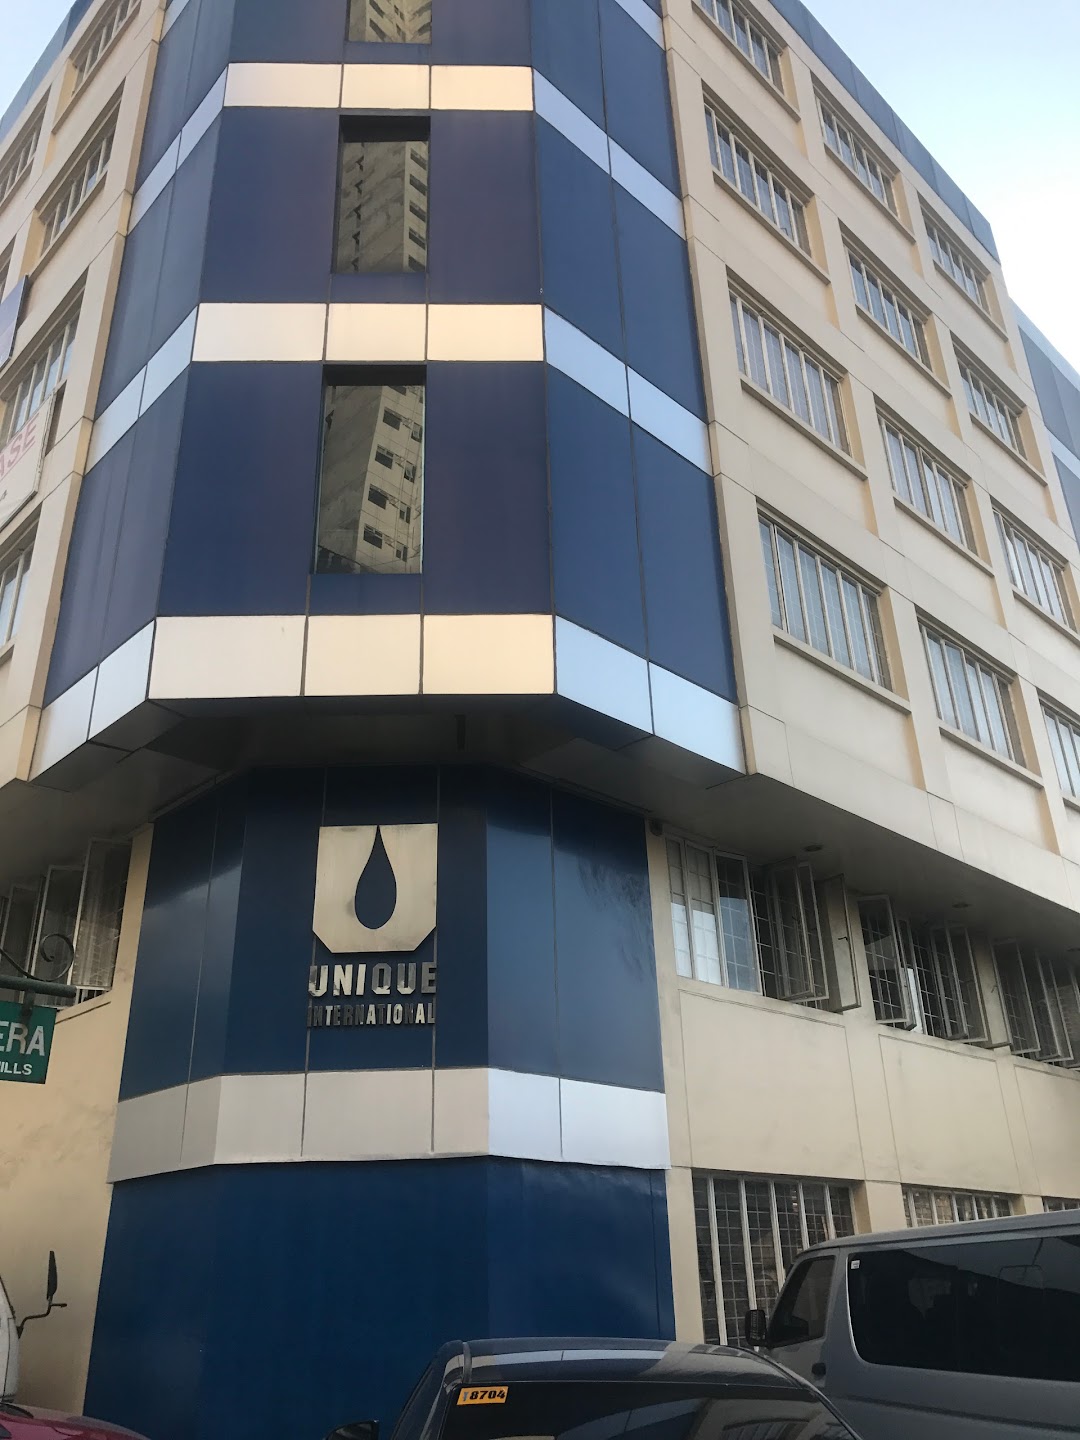 Unique International Building